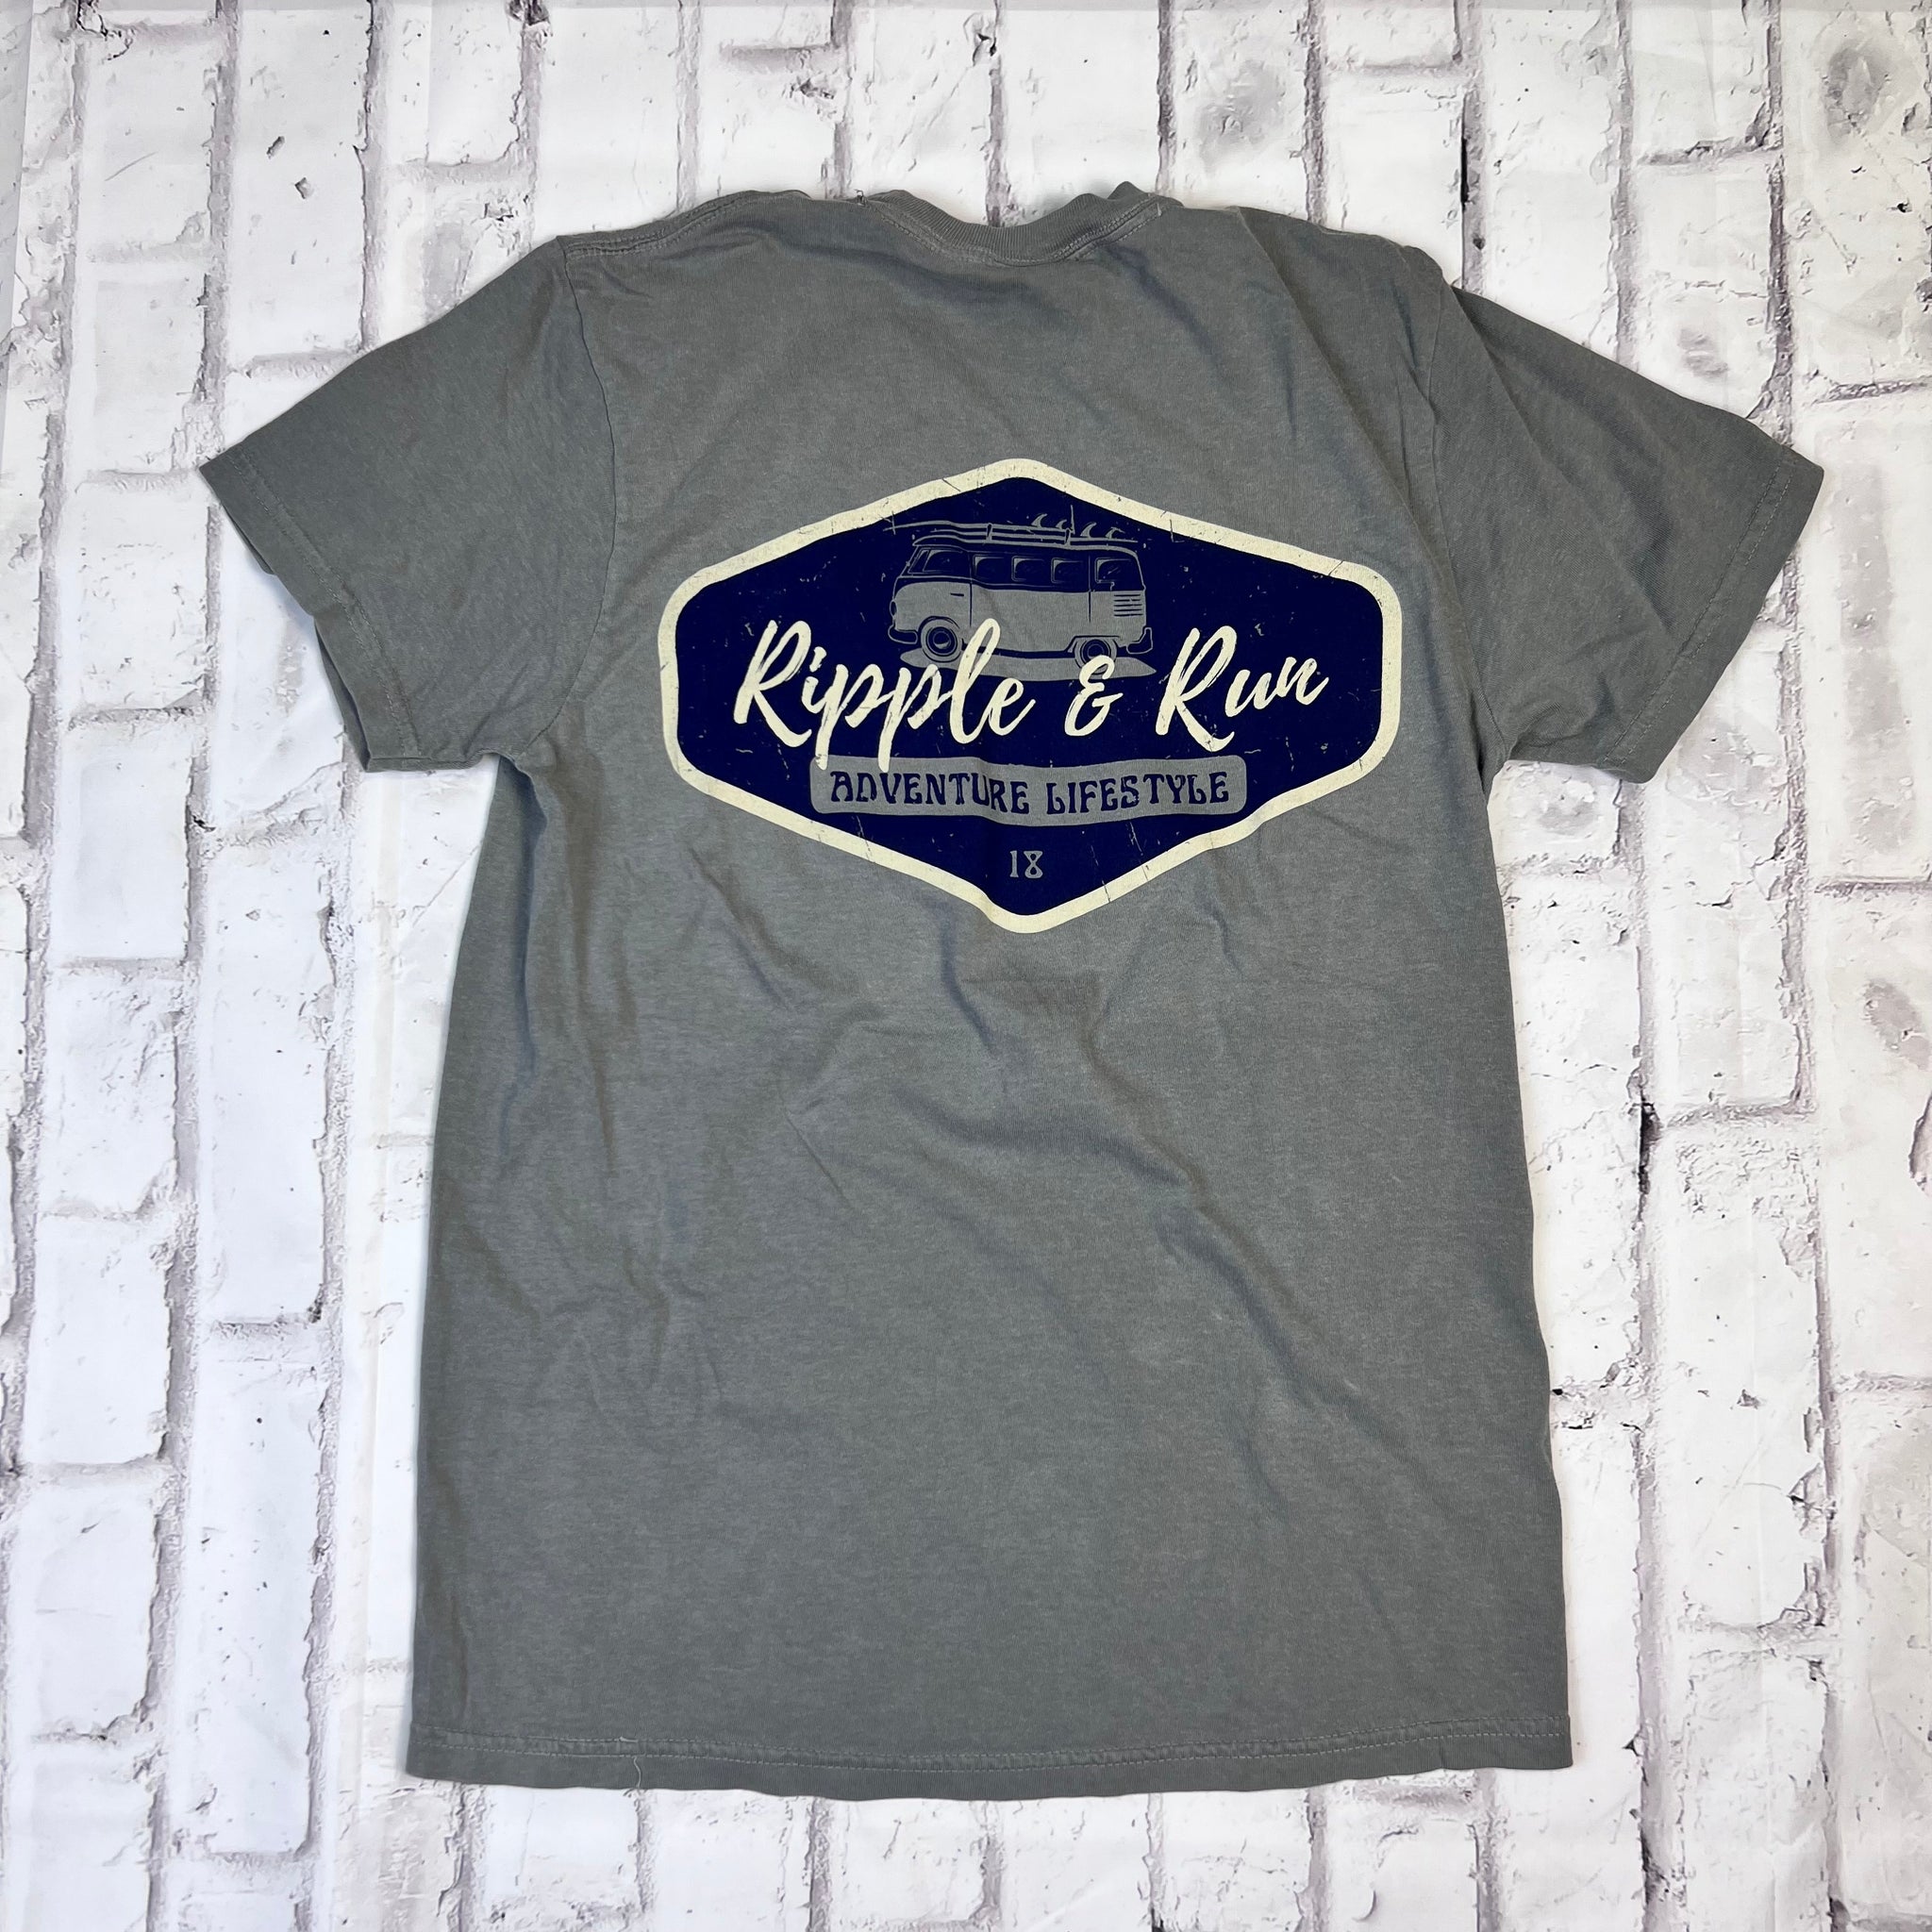 Ripple and Run "Adventure Lifestyle" Short Sleeve T-shirt - Gray